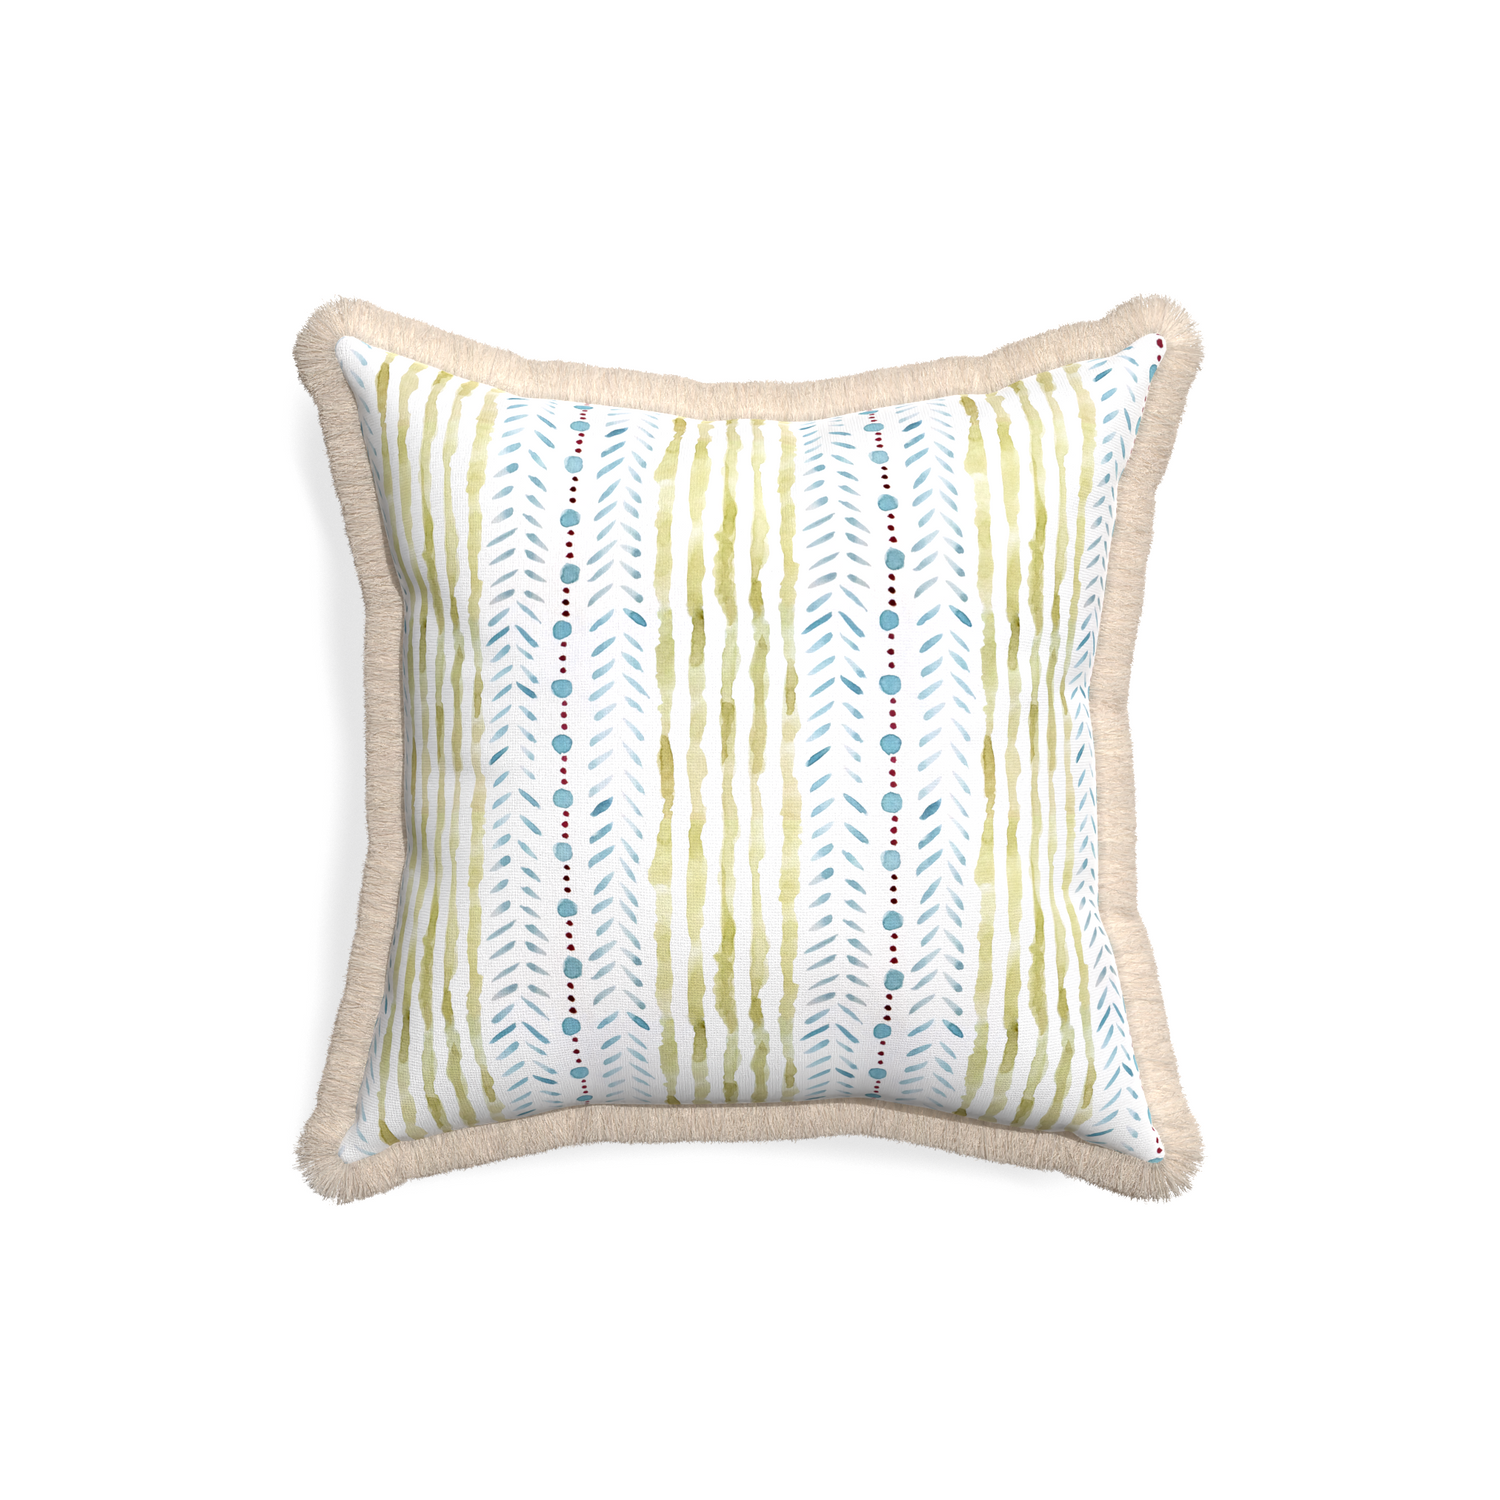 18-square julia custom pillow with cream fringe on white background